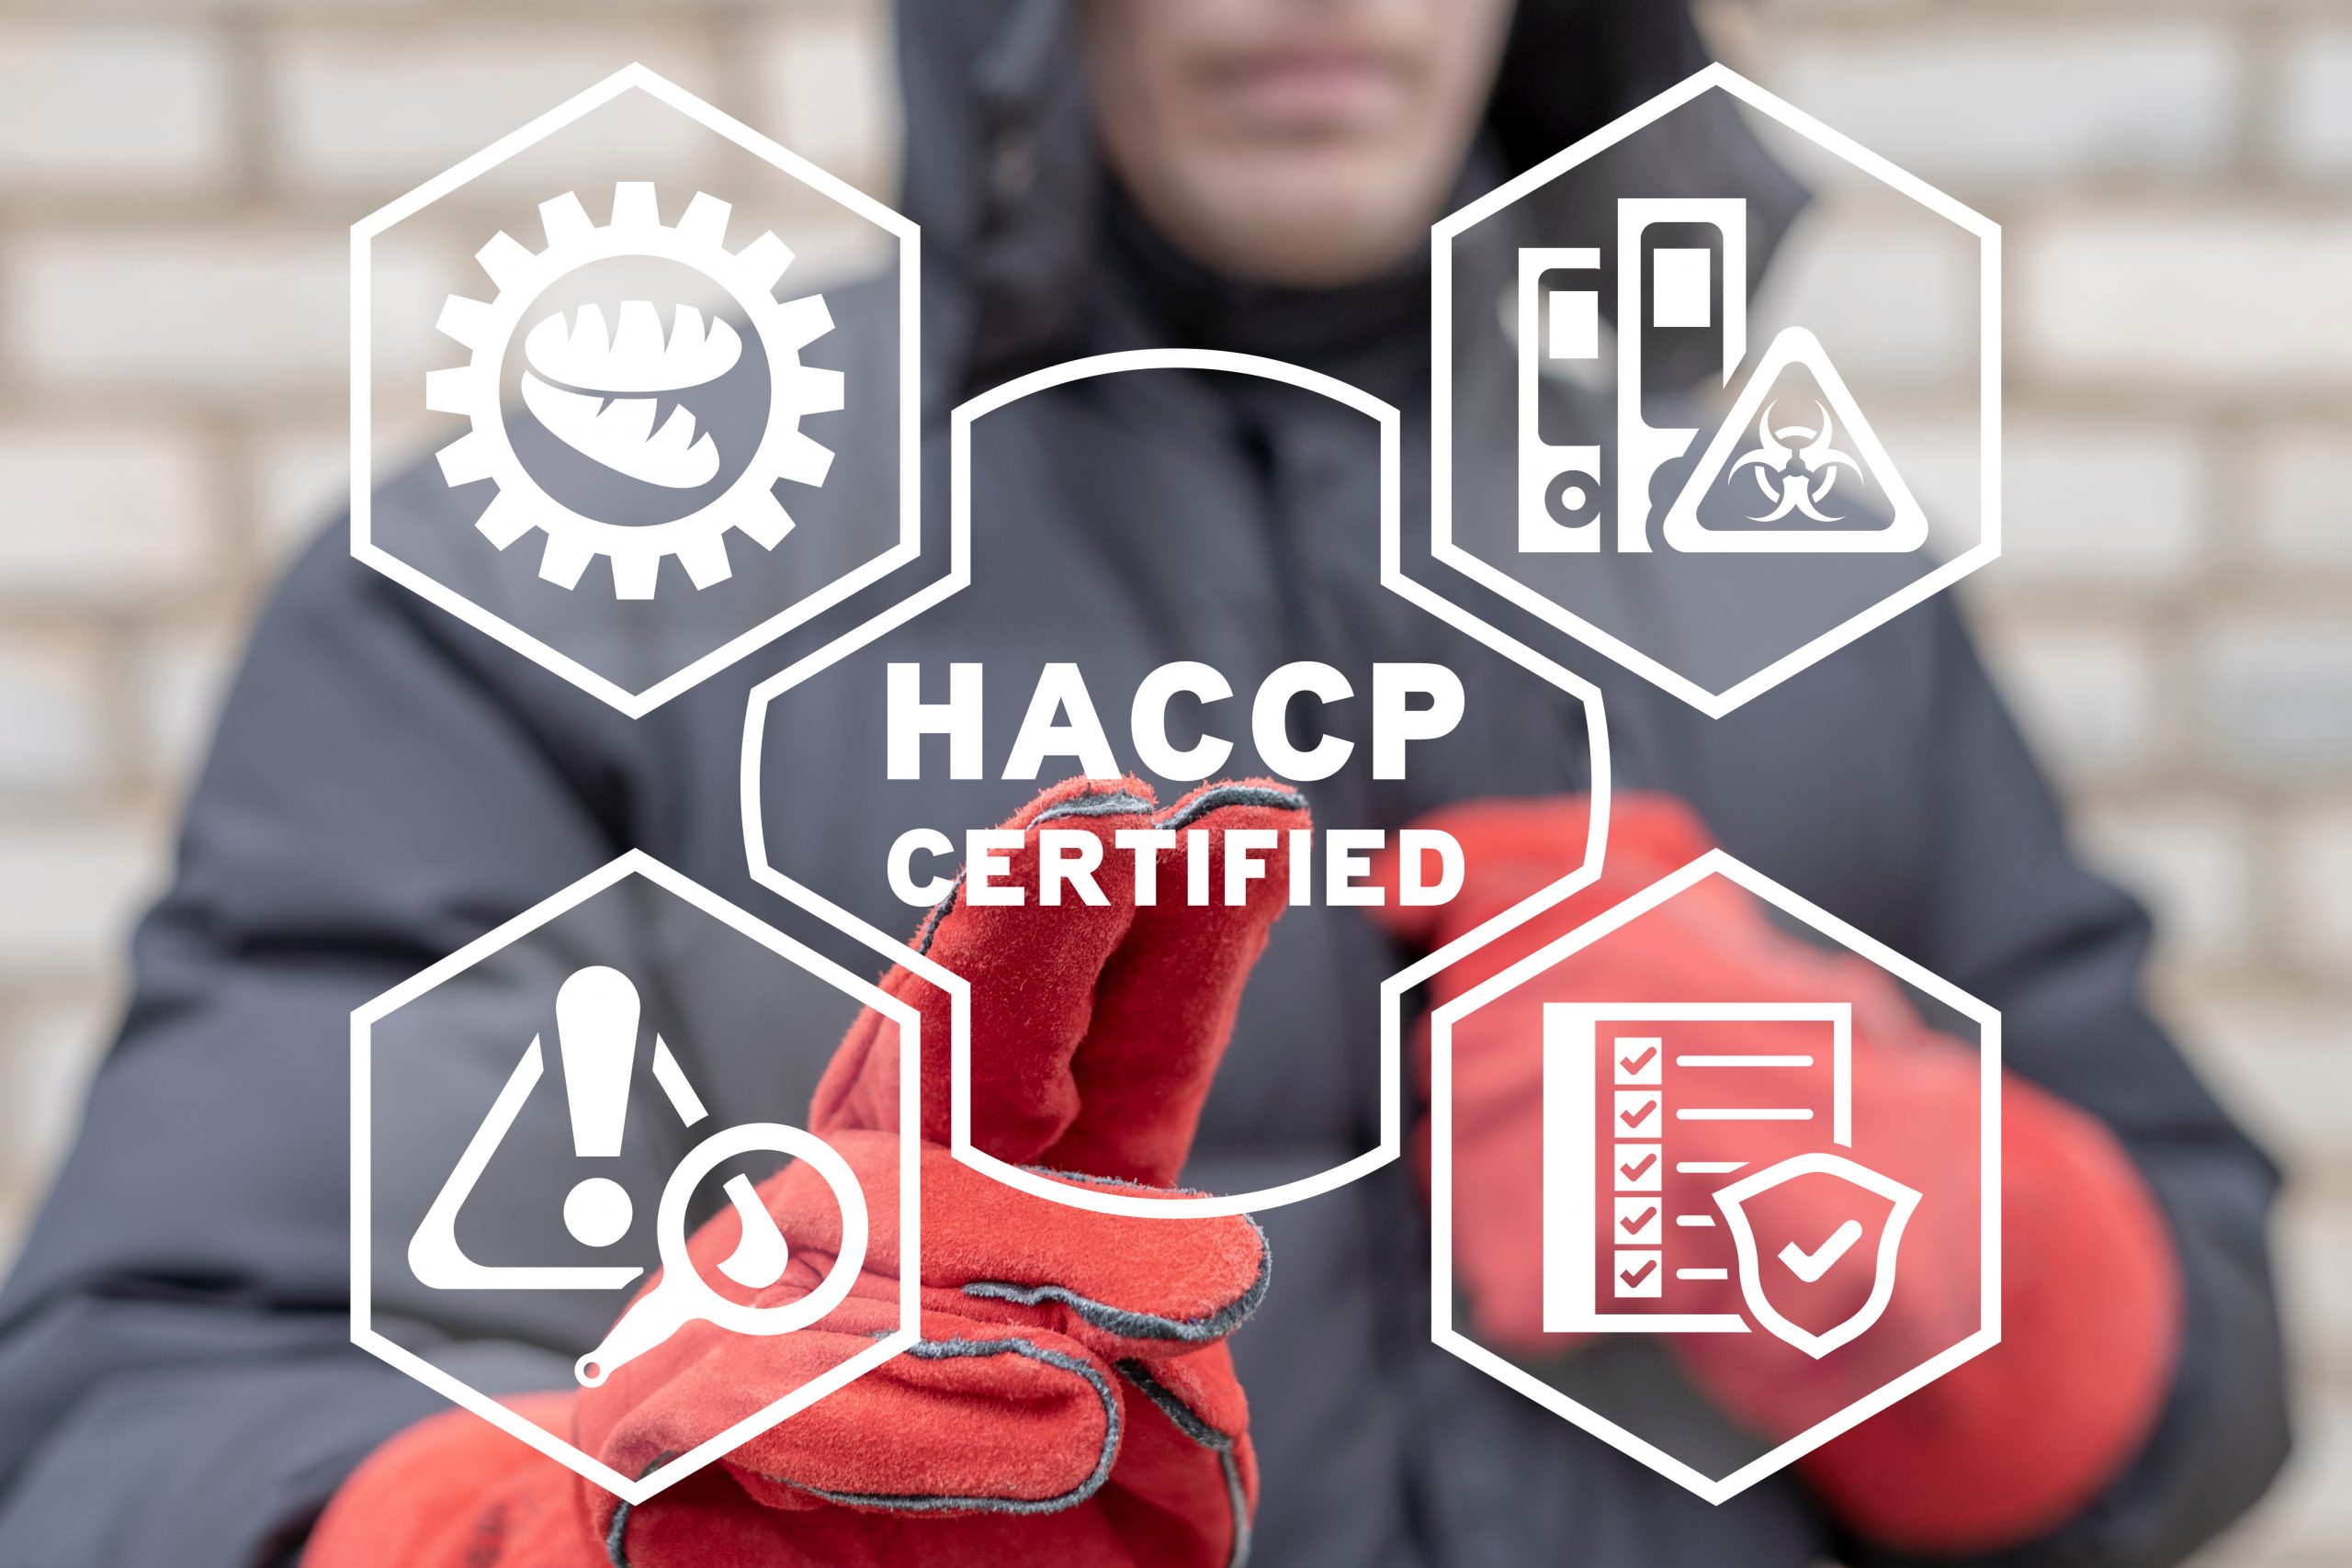 HACCP plan